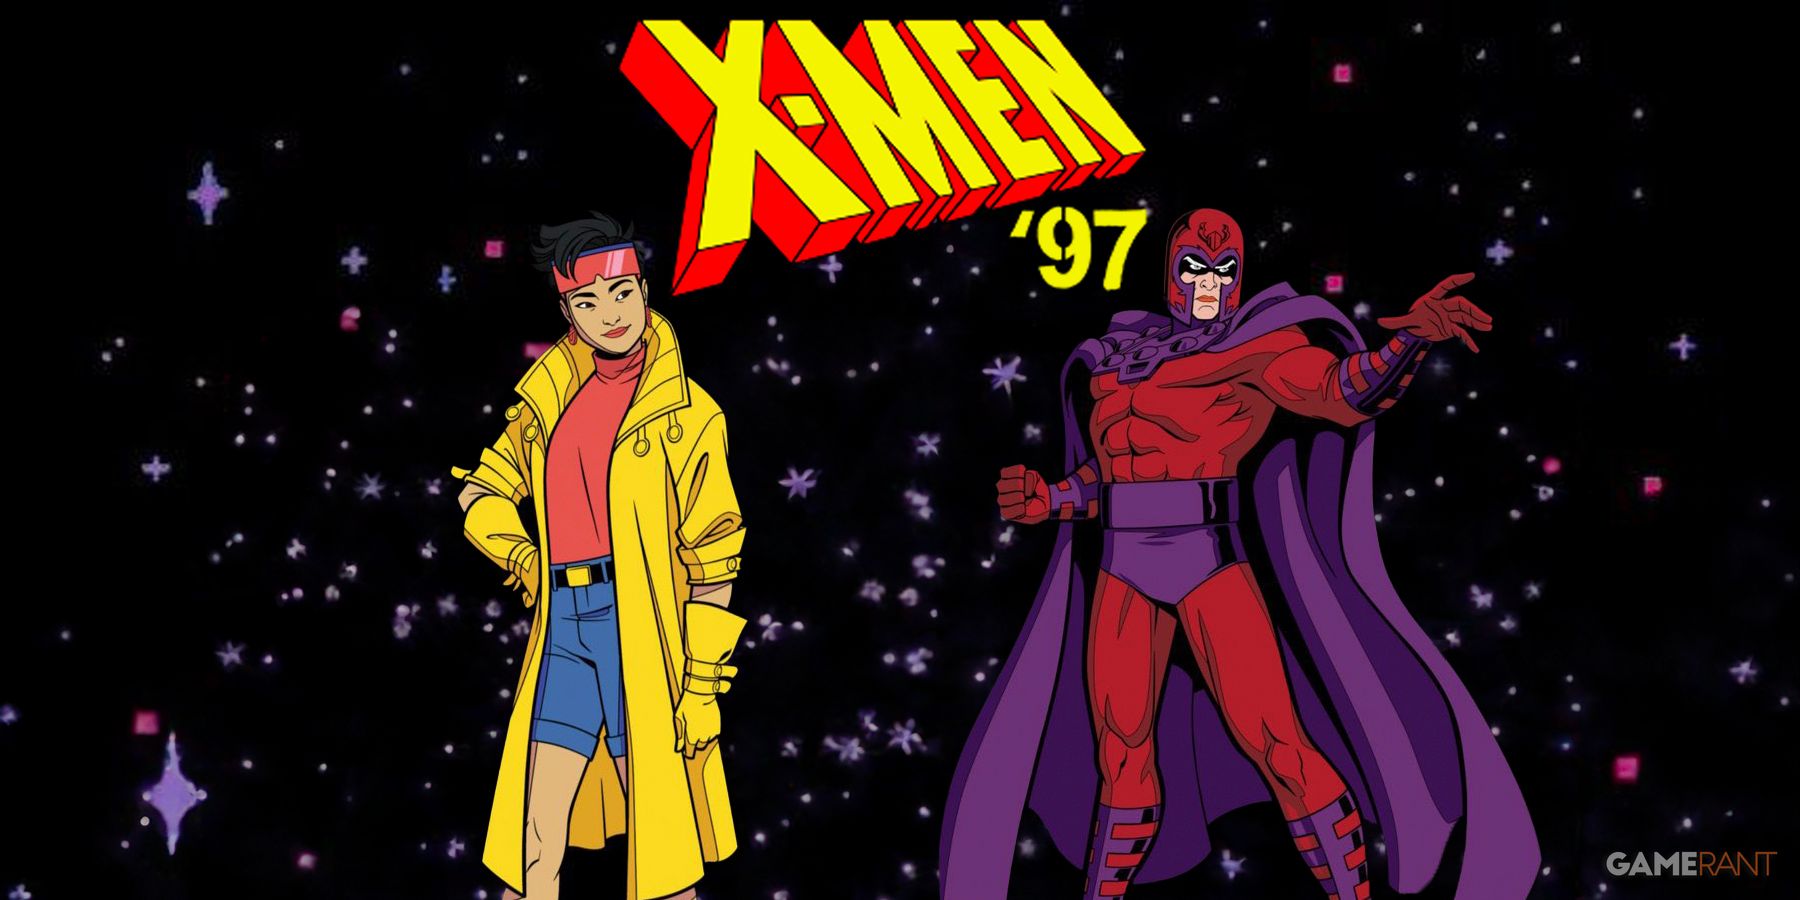 X-Men 97 Episodes Character Designs